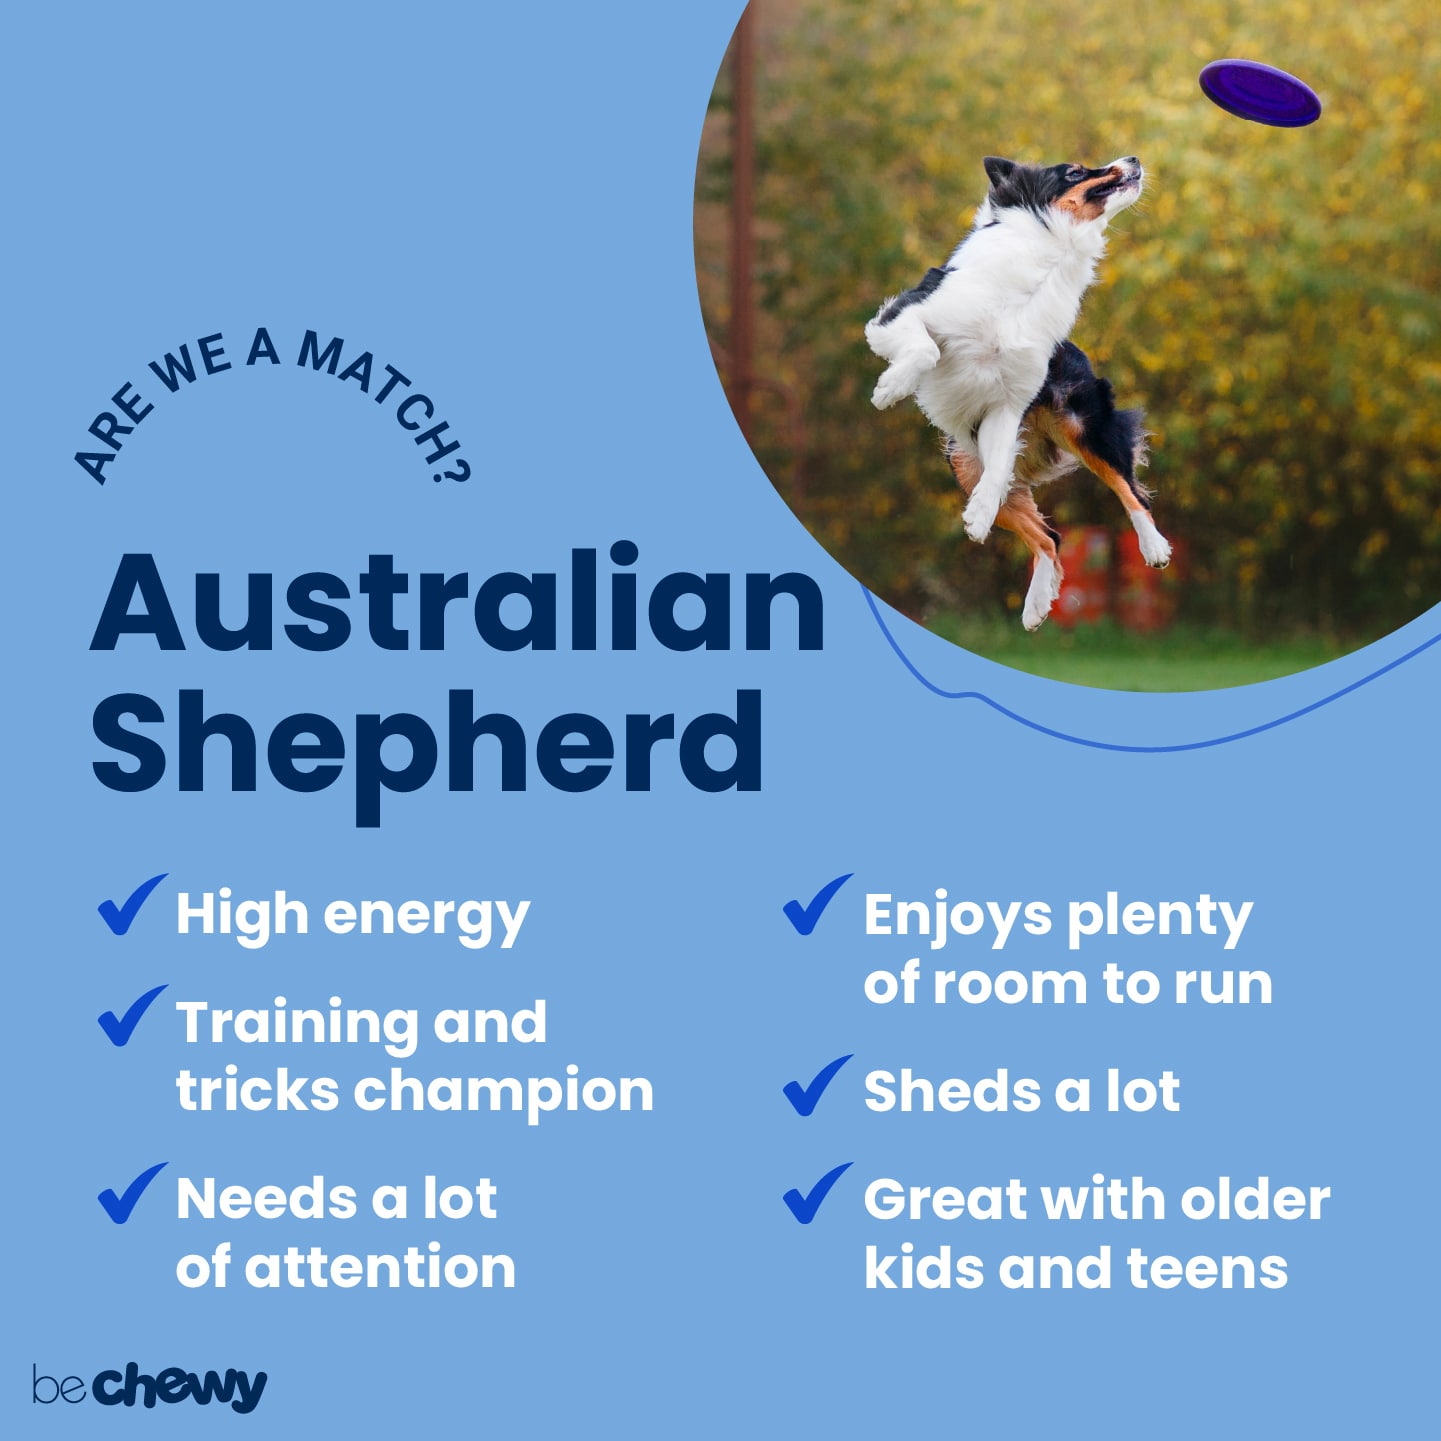 curious if australian shepherd dogs are hypoallergenic